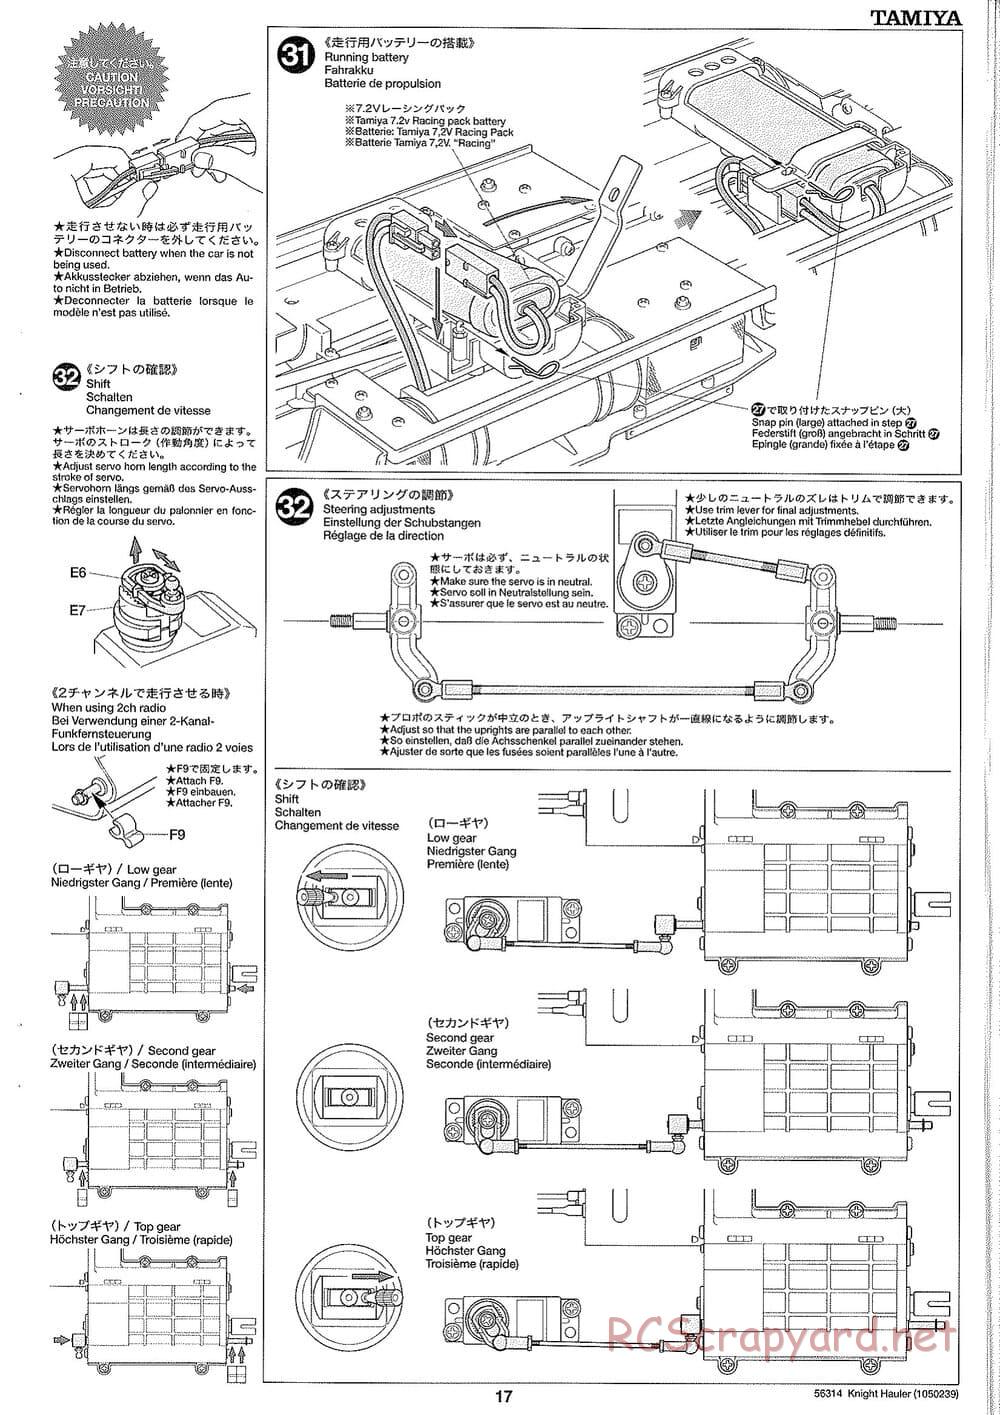 Tamiya - Knight Hauler Tractor Truck Chassis - Manual - Page 17